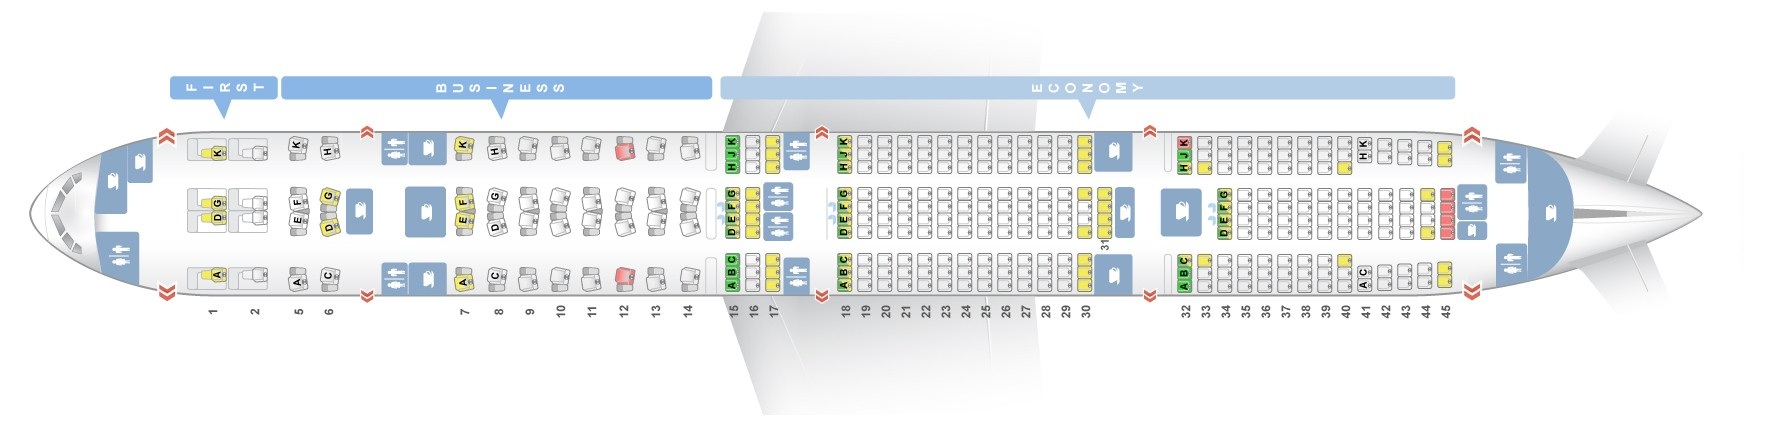 Seat Map Boeing 777 300 Etihad Airways Best Seats In The Plane